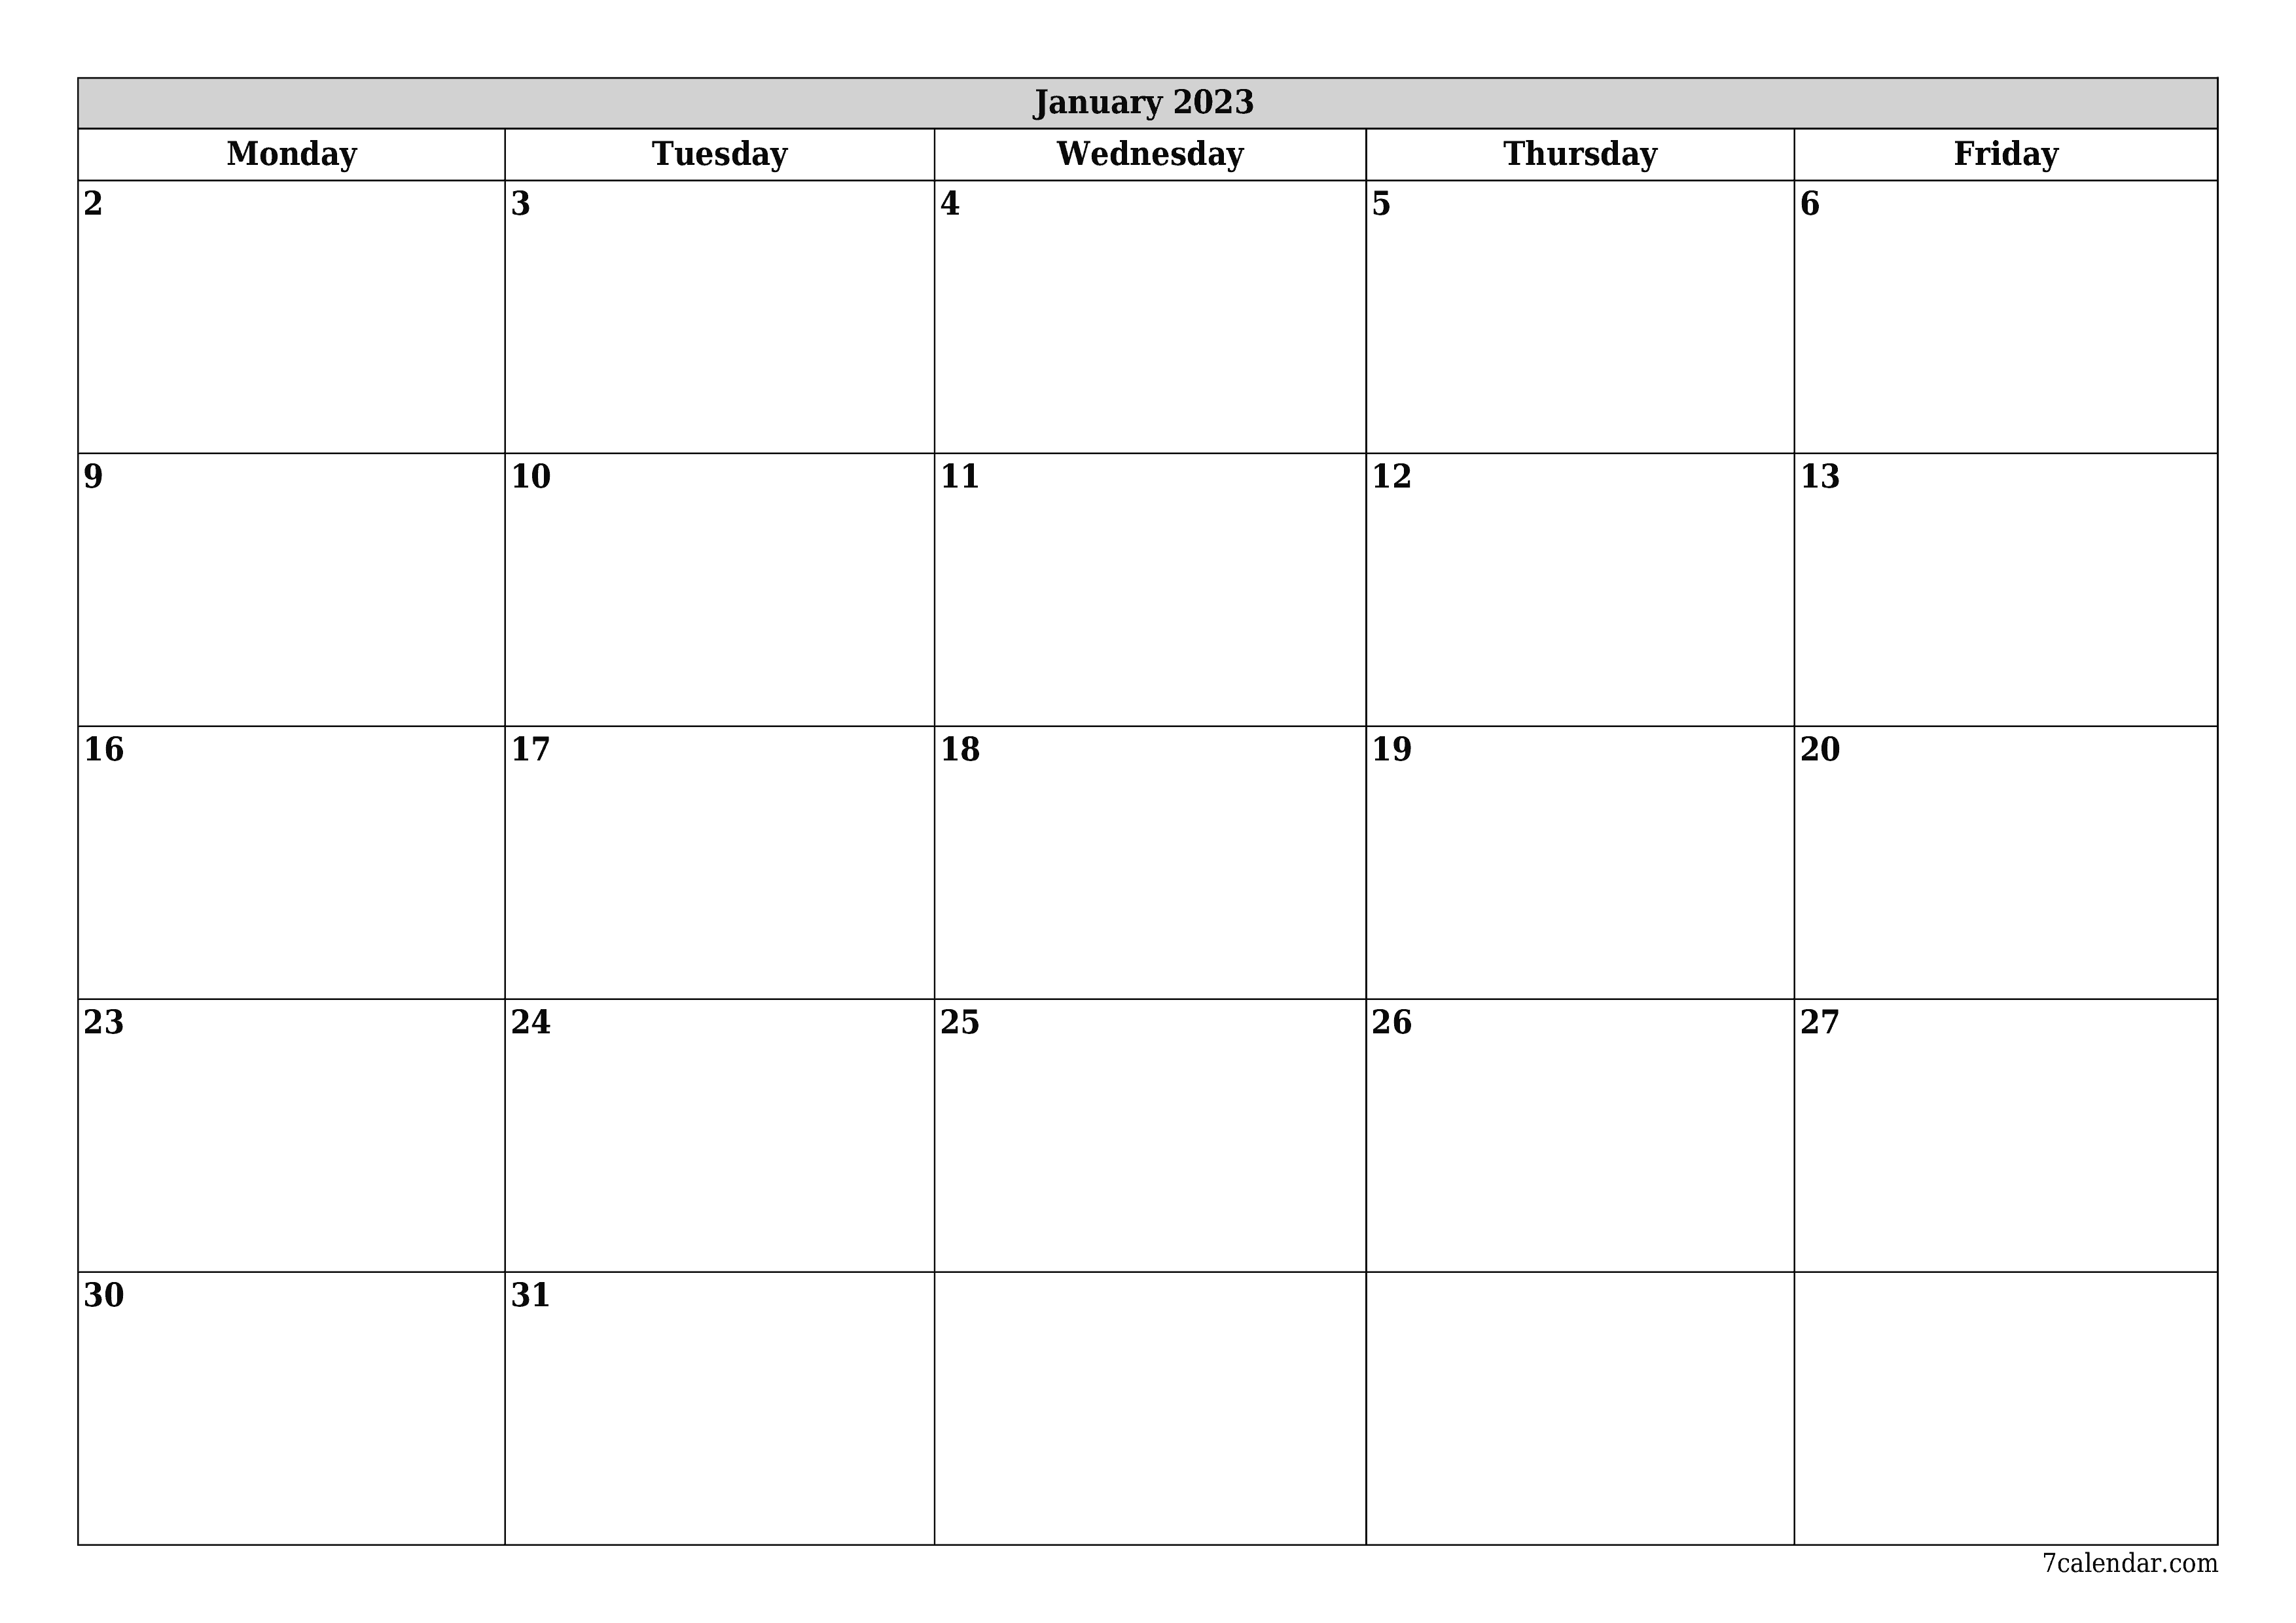 Blank calendar January 2023